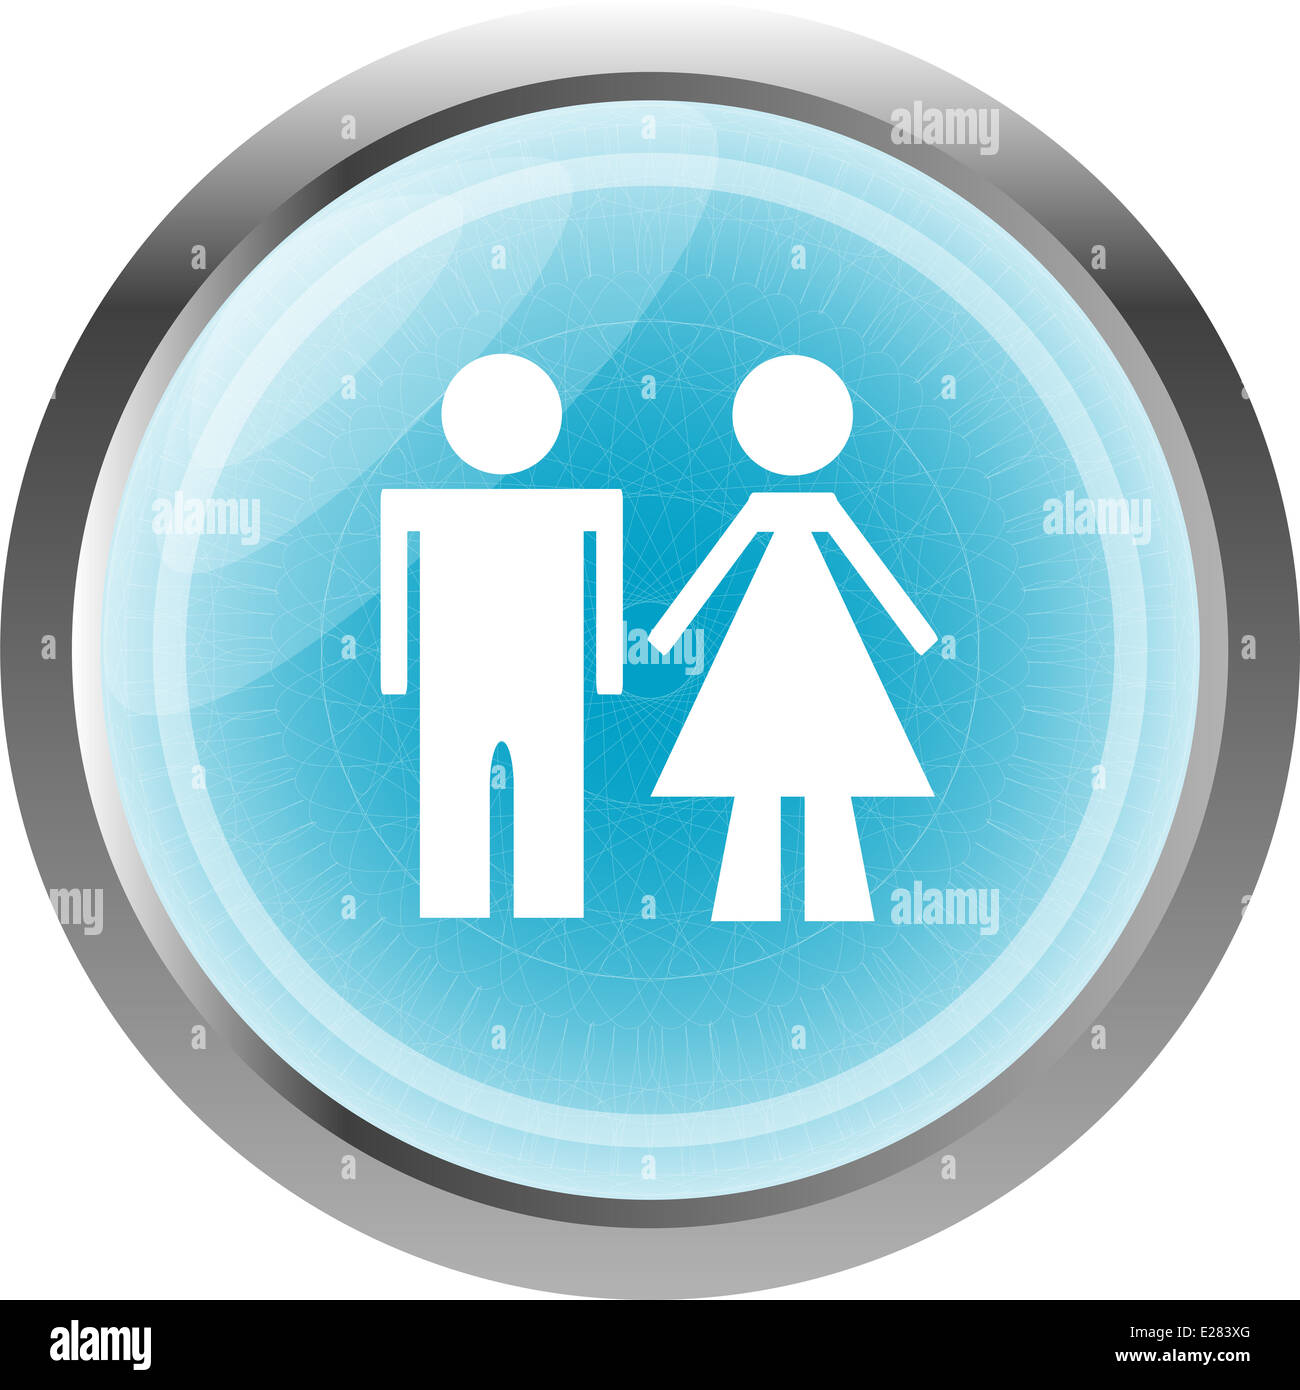 icon toilet button, Man and Woman, isolated on white Stock Photo